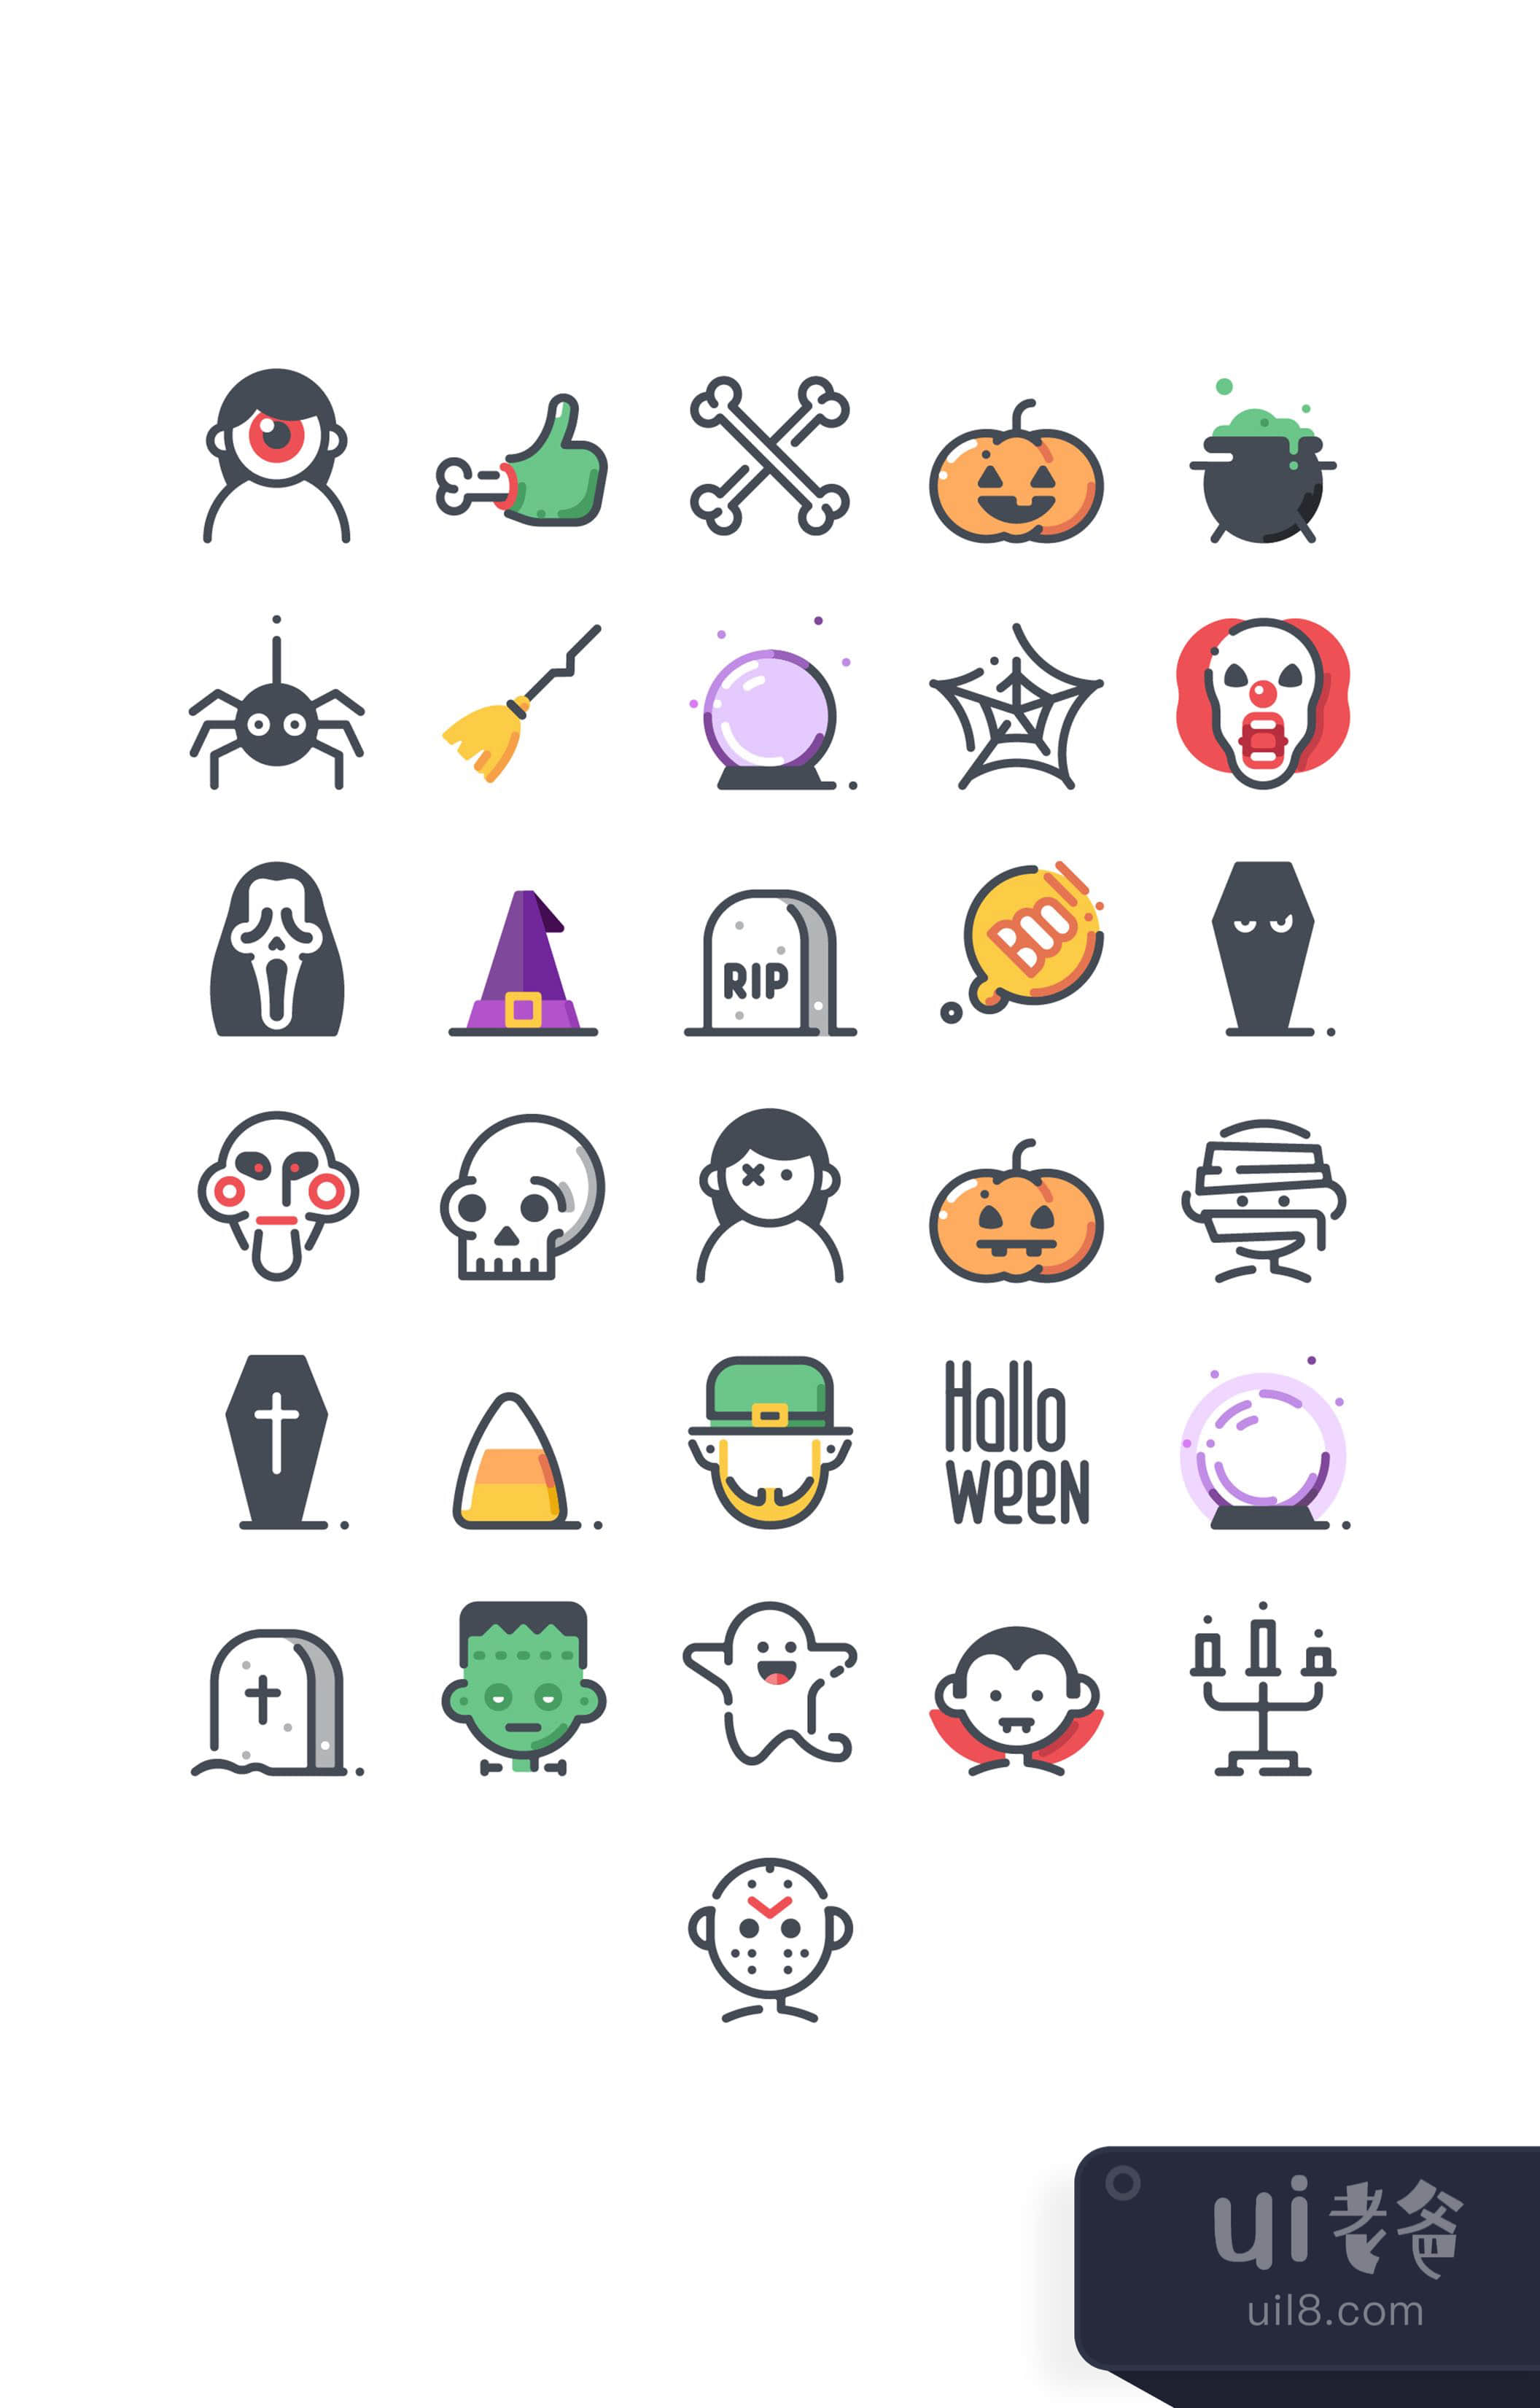 31个万圣节图标 (31 Halloween Icons)插图